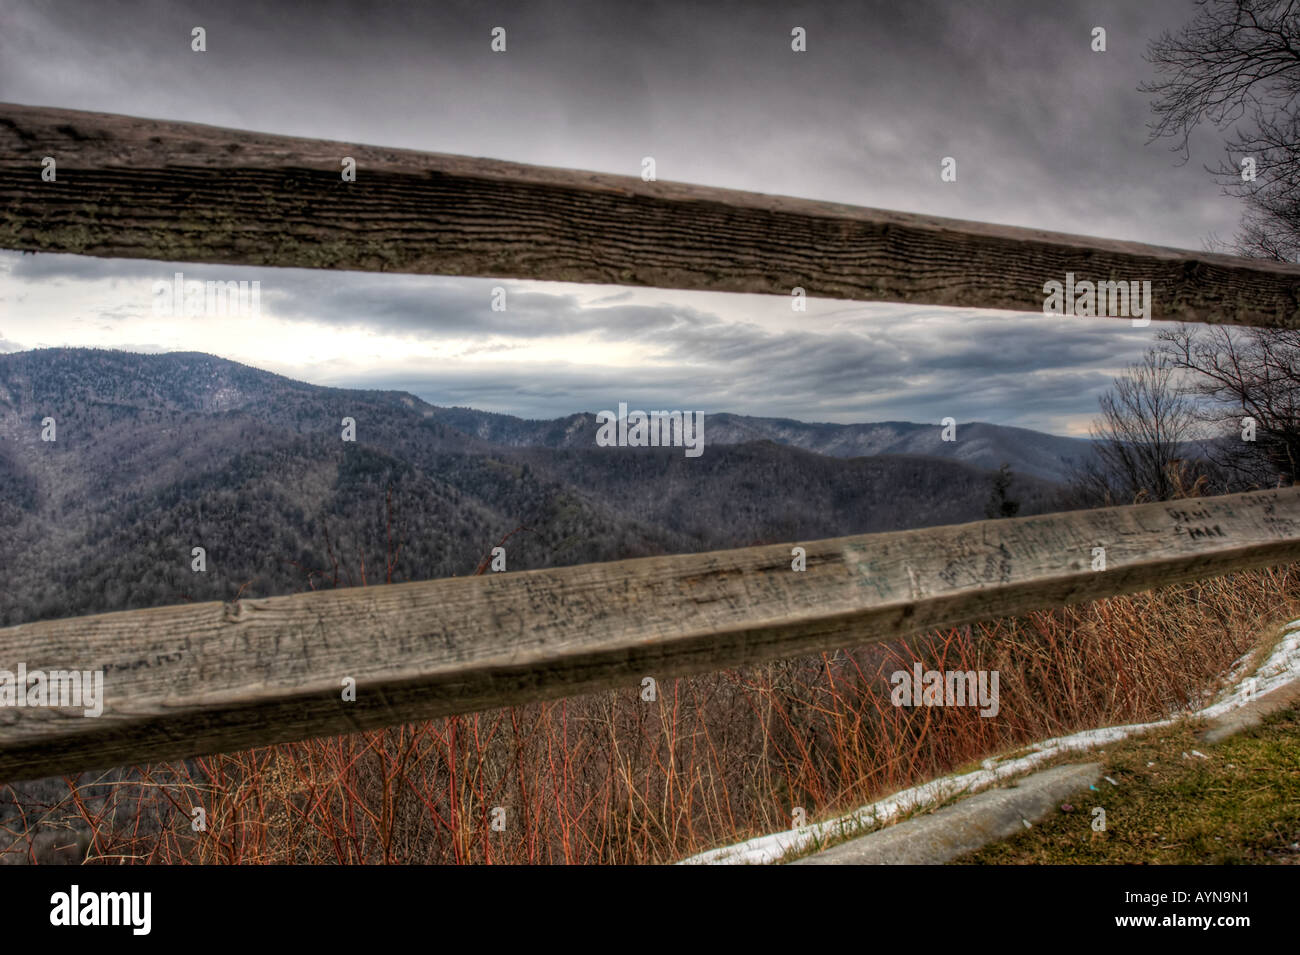 Great Smoky Mountains Berg hohe Wolken trüben Rahmen Rahmung Landschaft Natur Tennessee Büsche Stockfoto